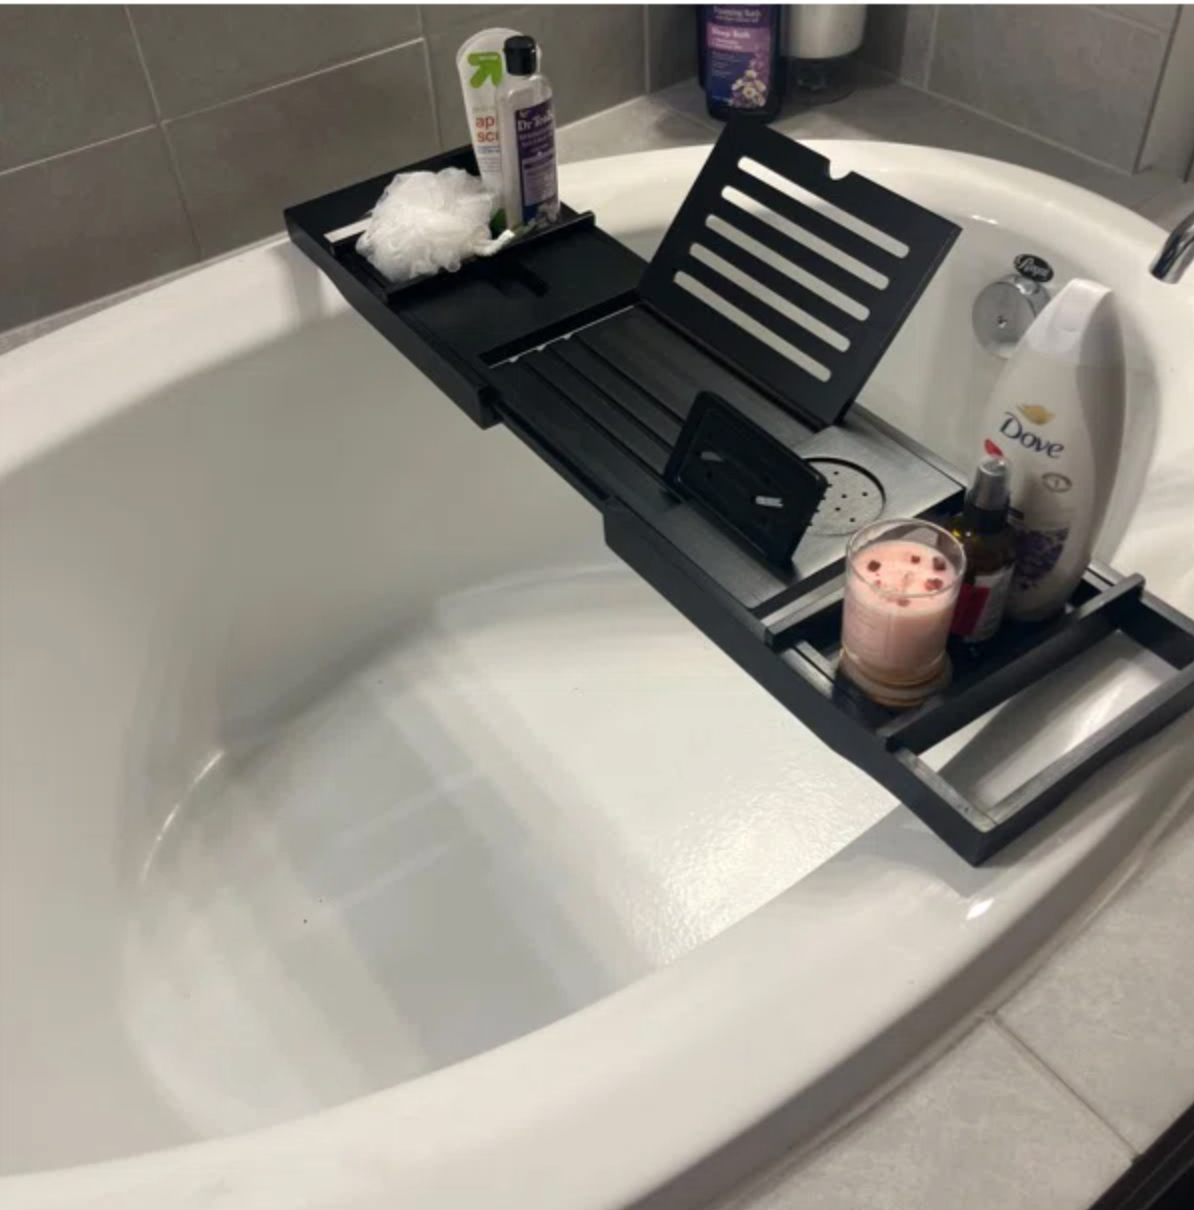 a black bath tub caddy holding shampoo bottles, a phone and a drink